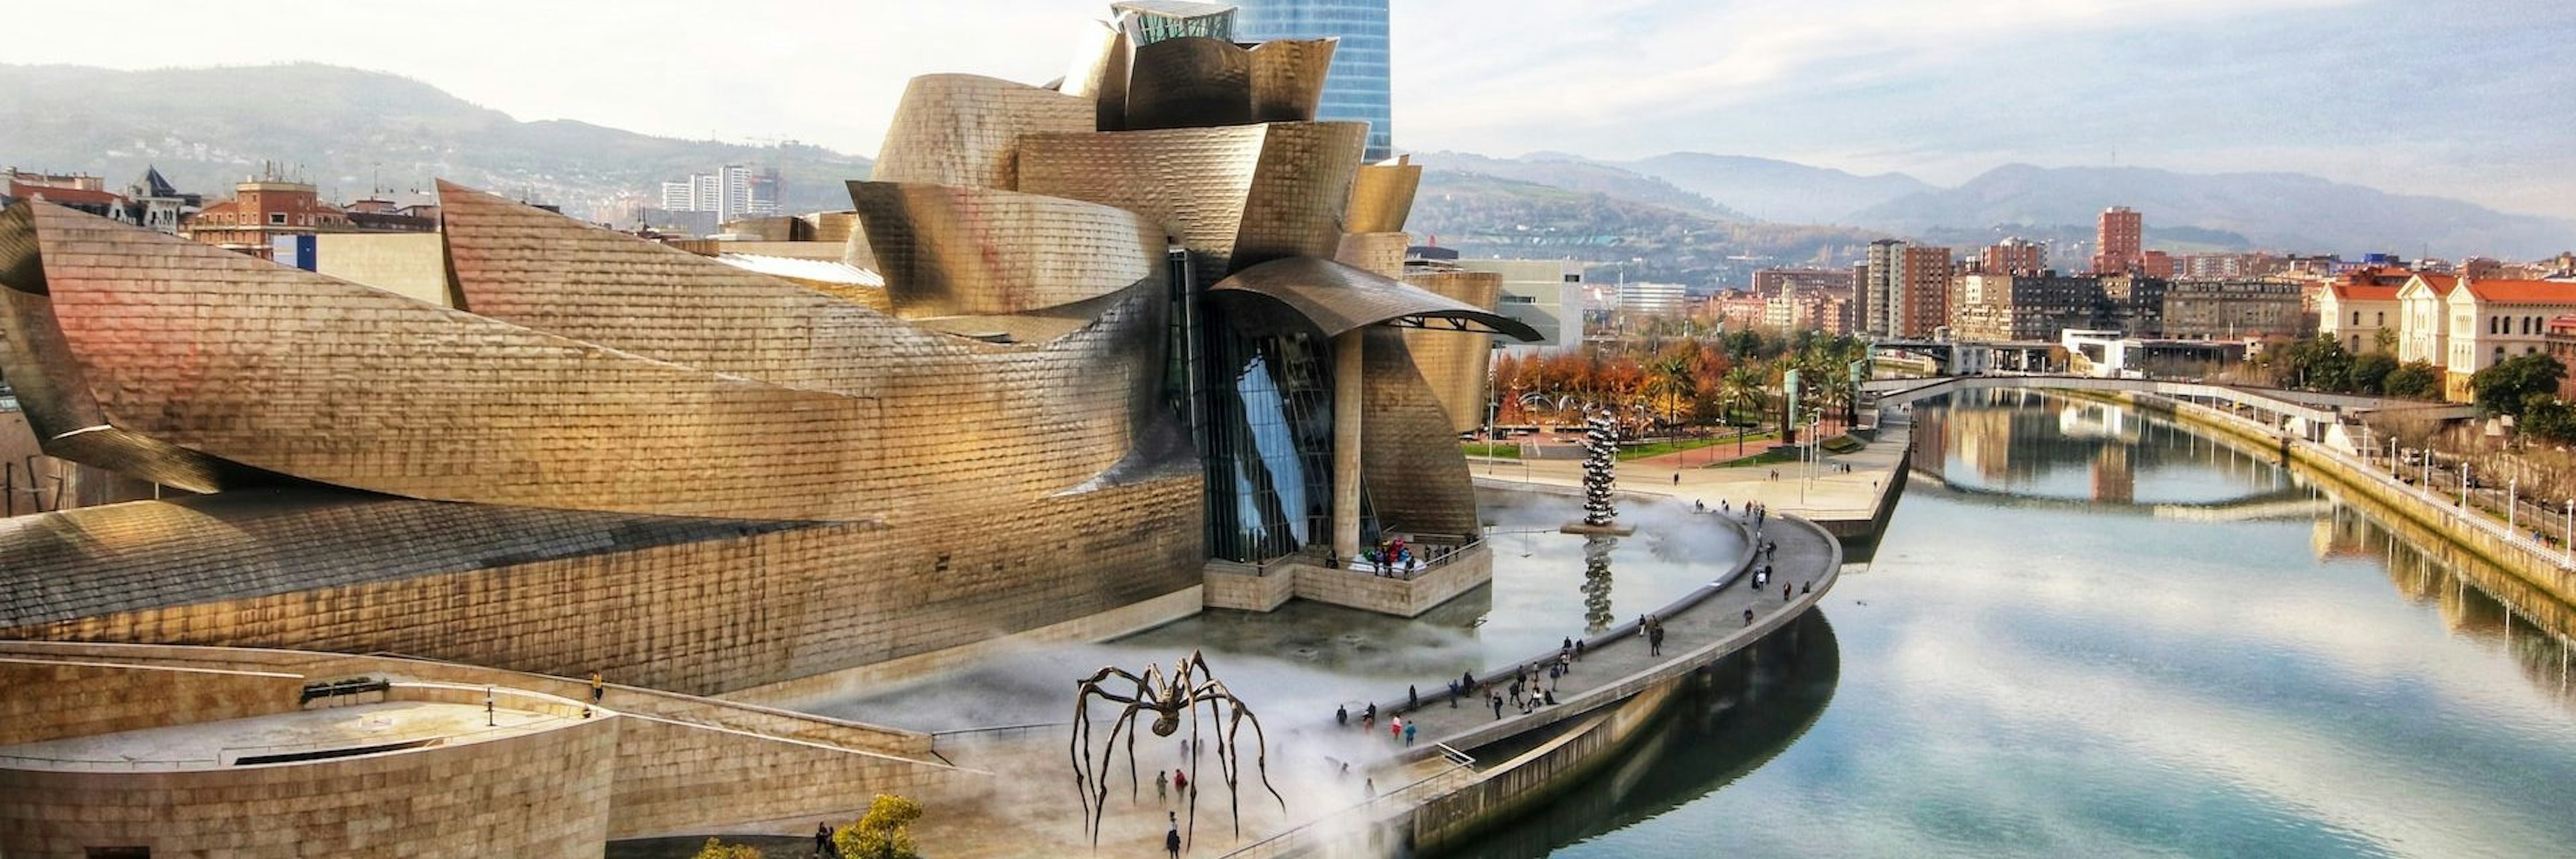 An image of the Guggenheim in Bilbao, Spain